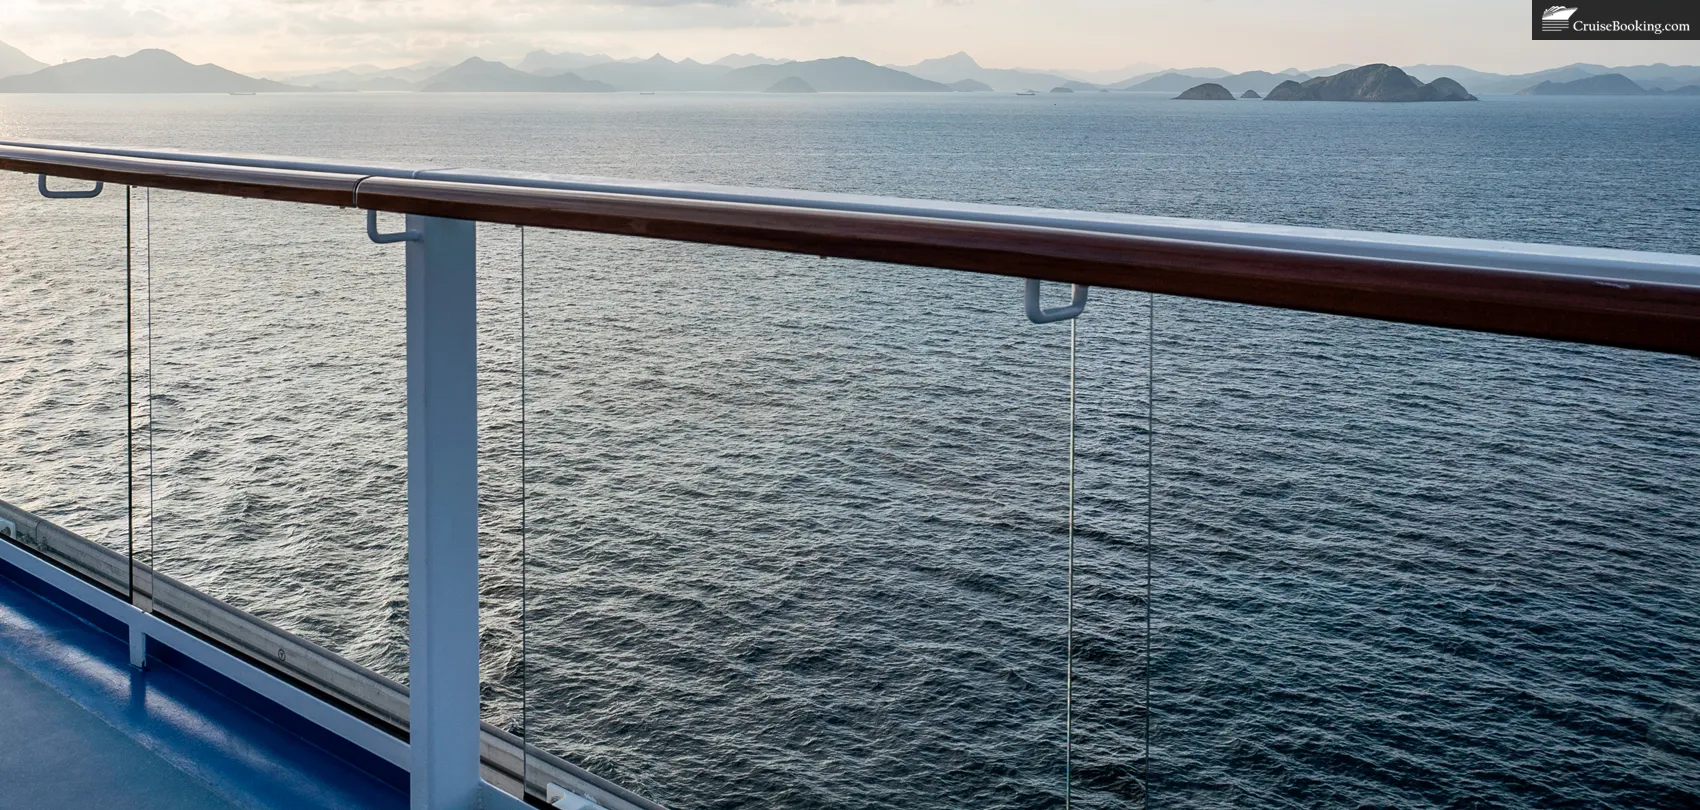 balcony on a cruise